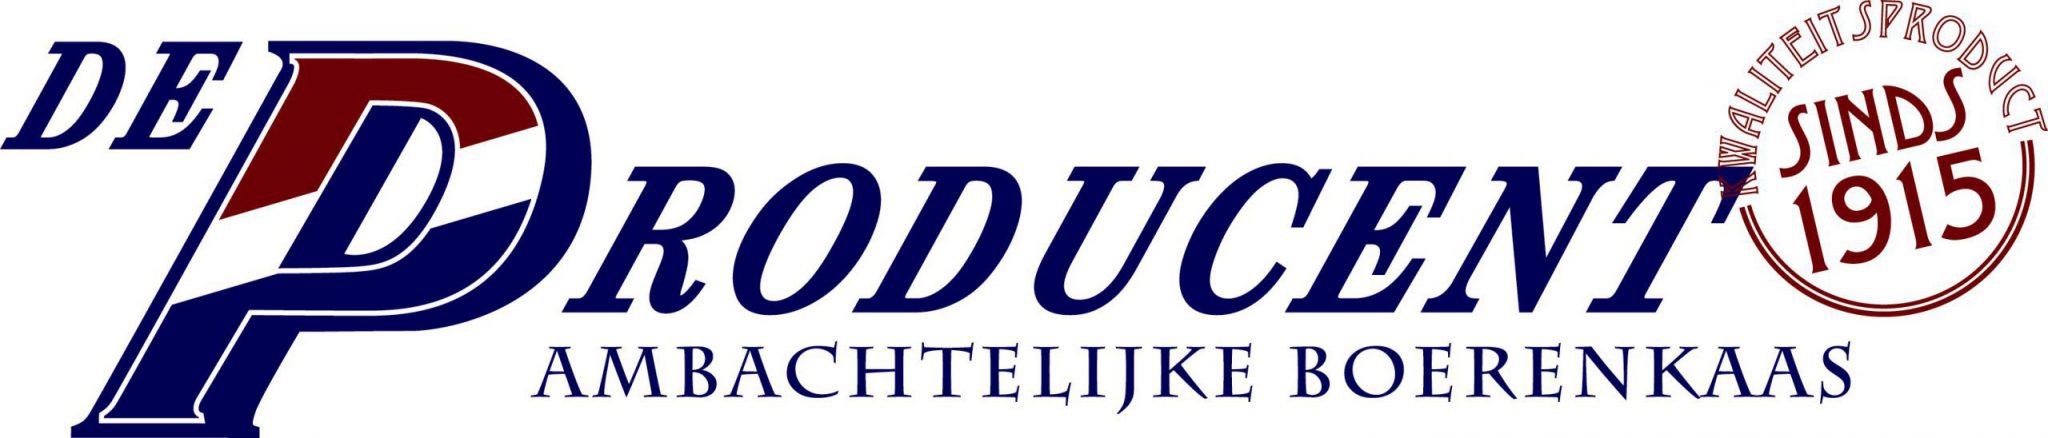 de producent logo